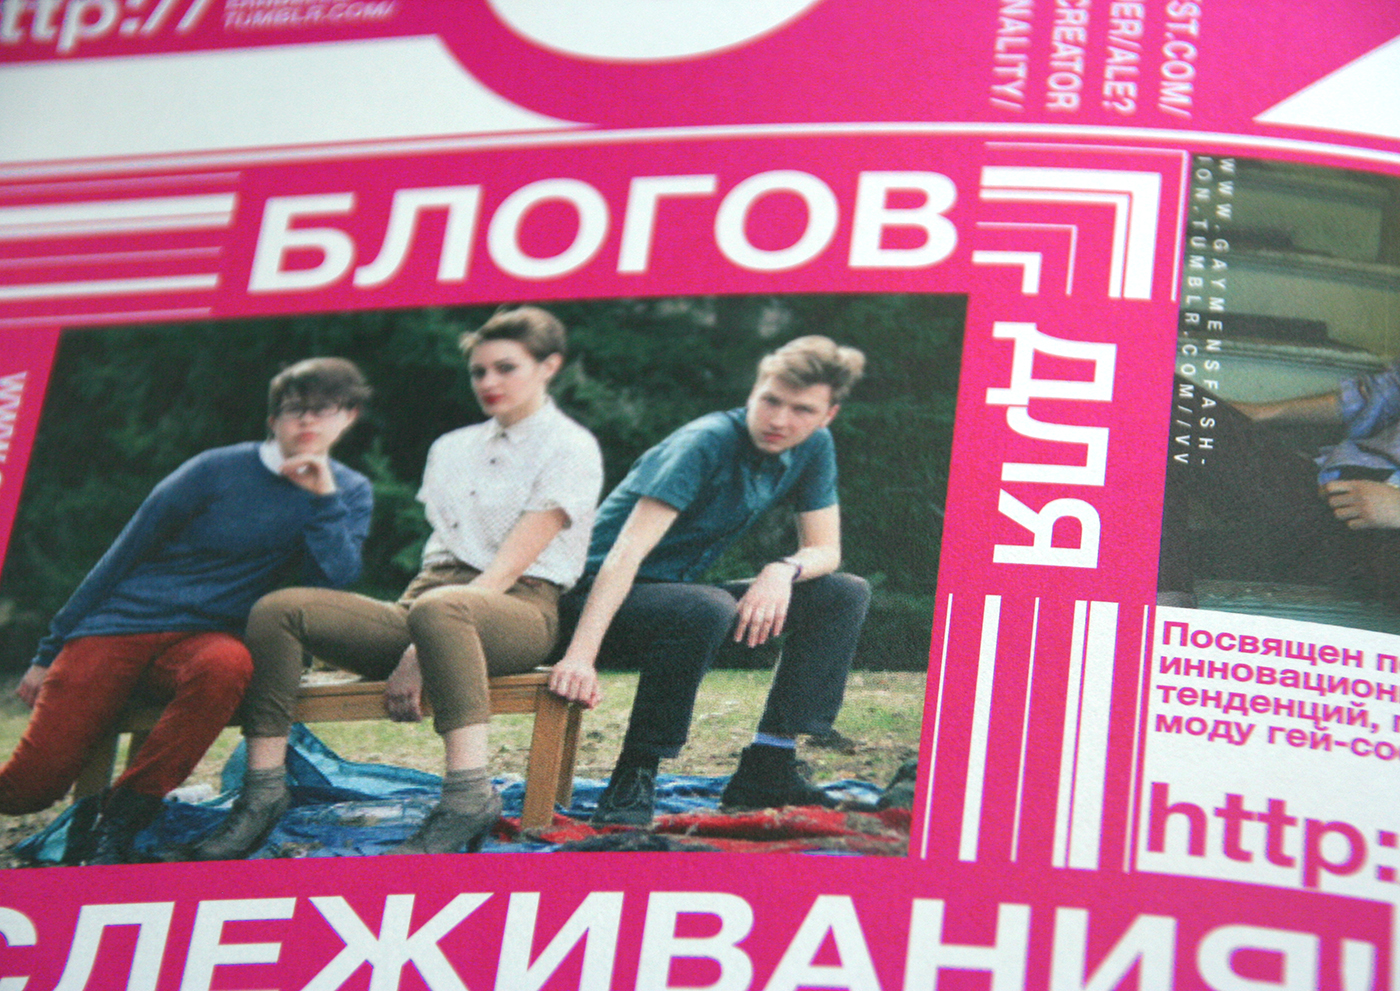 Russian Gay Magazine - Gabriella Jangfeldt